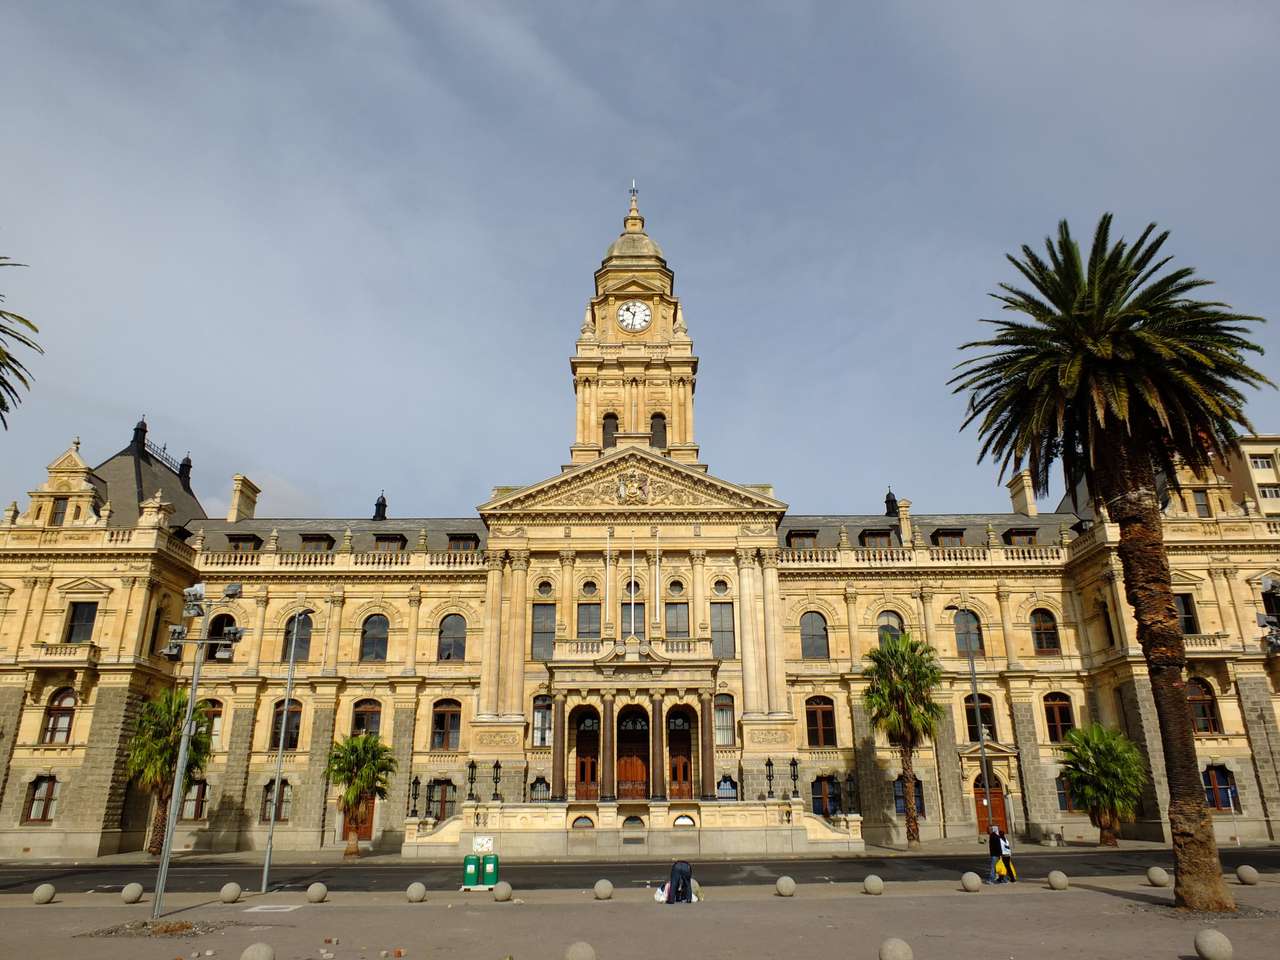 Het stadhuis in Kaapstad, Zuid-Afrika online puzzel